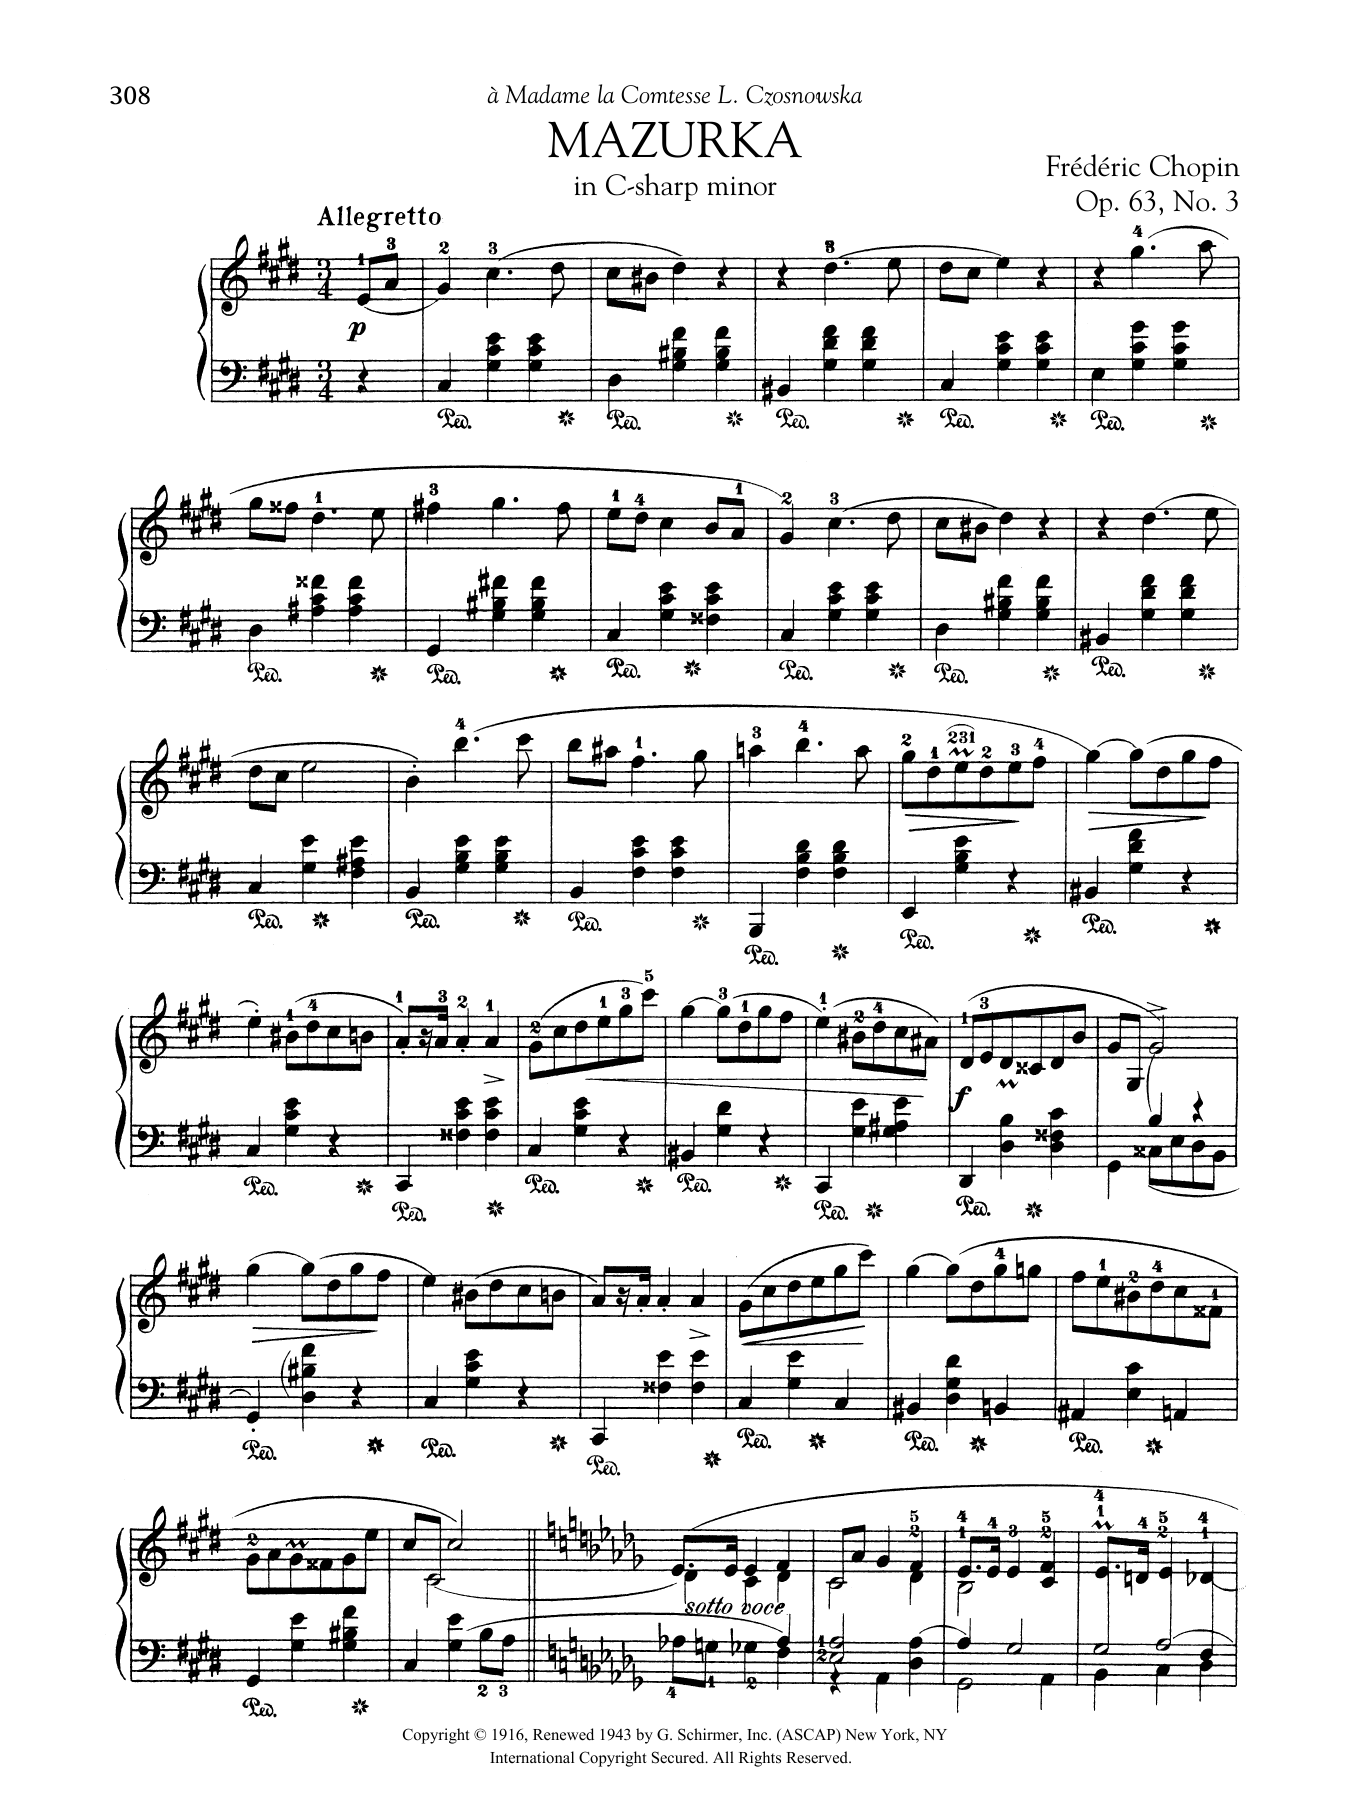 Mazurka In C-sharp minor, Op. 63, No. 3 sheet music